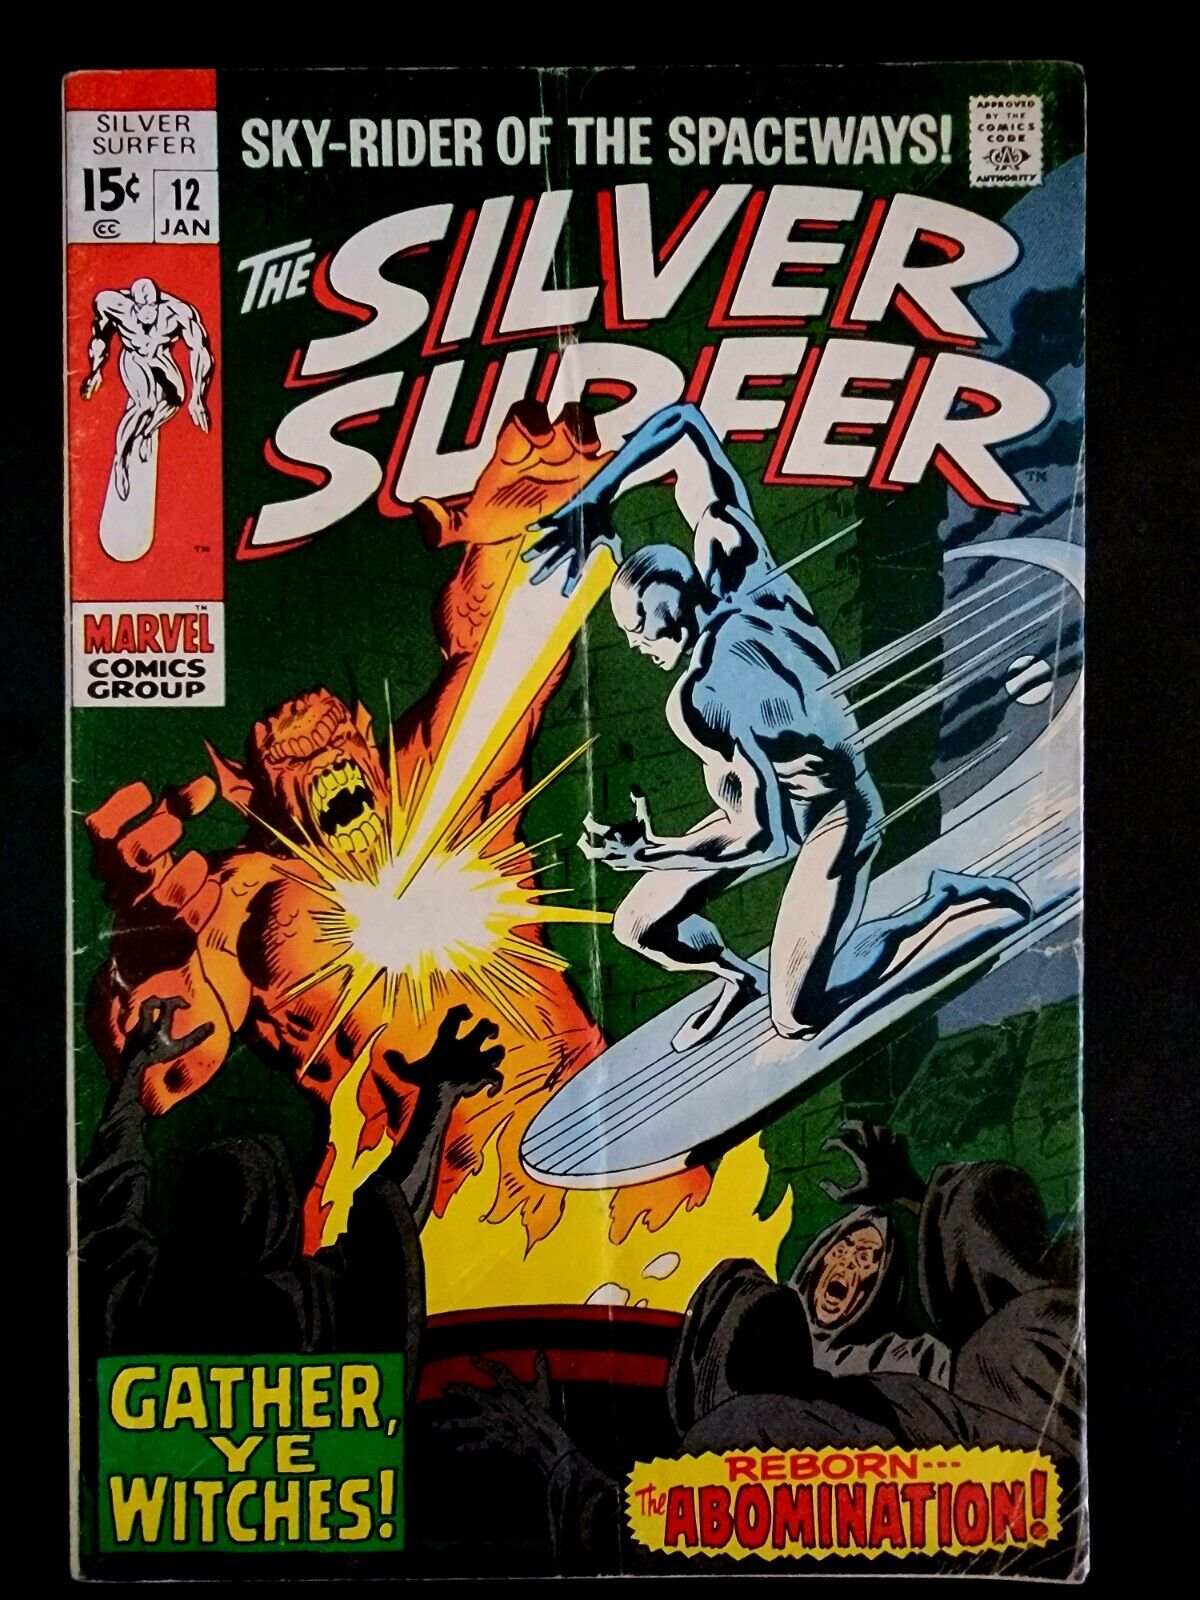 The Silver Surfer #12 (Jan 1970, Marvel)